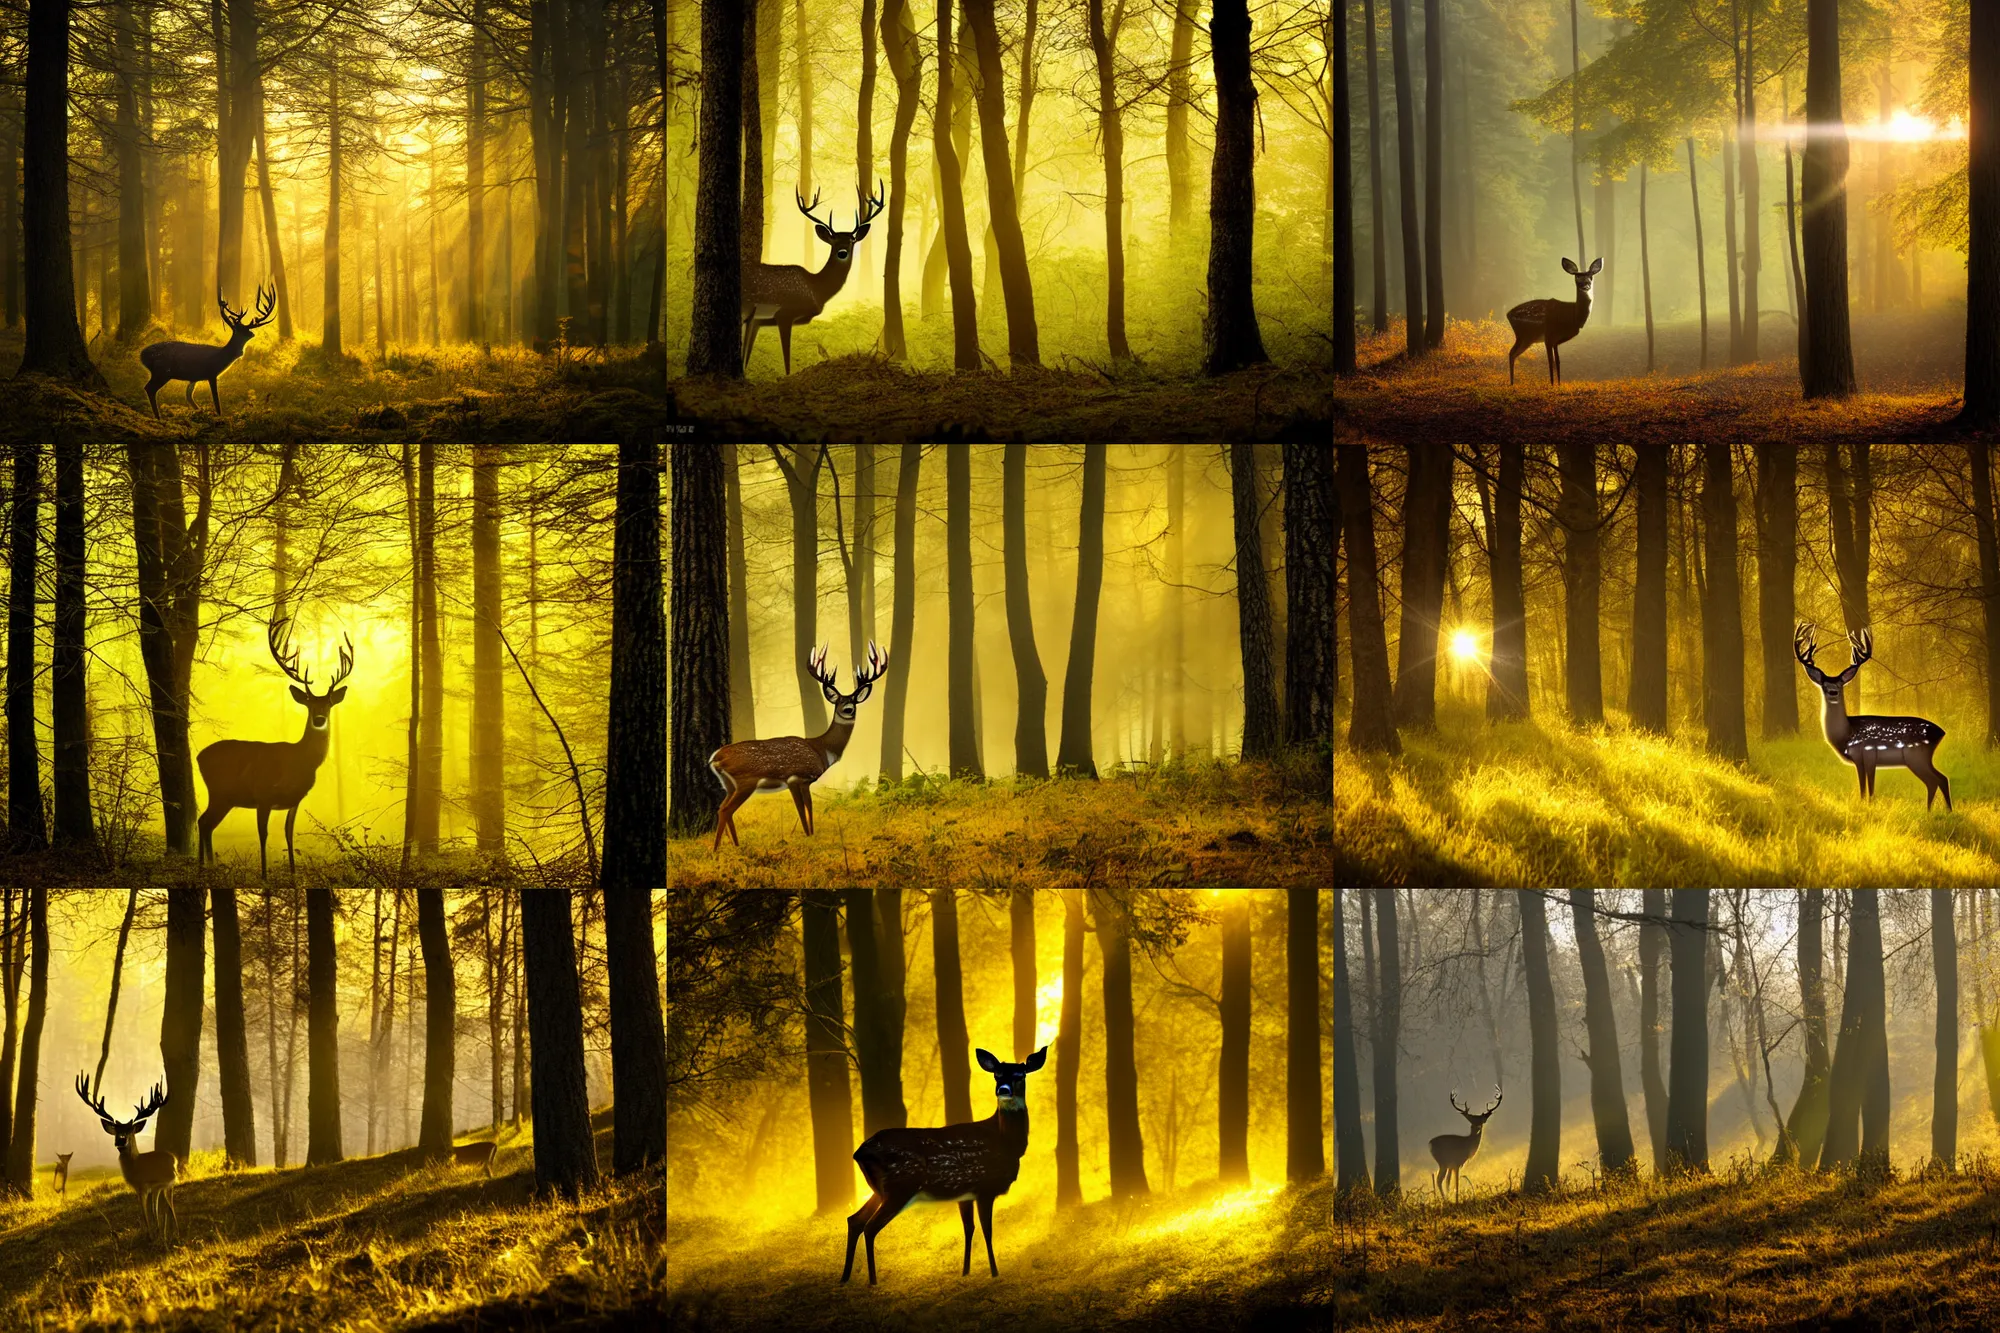 Prompt: deer portrait, glowing yellow eyes, landscape, misty forest scene, sun through the trees